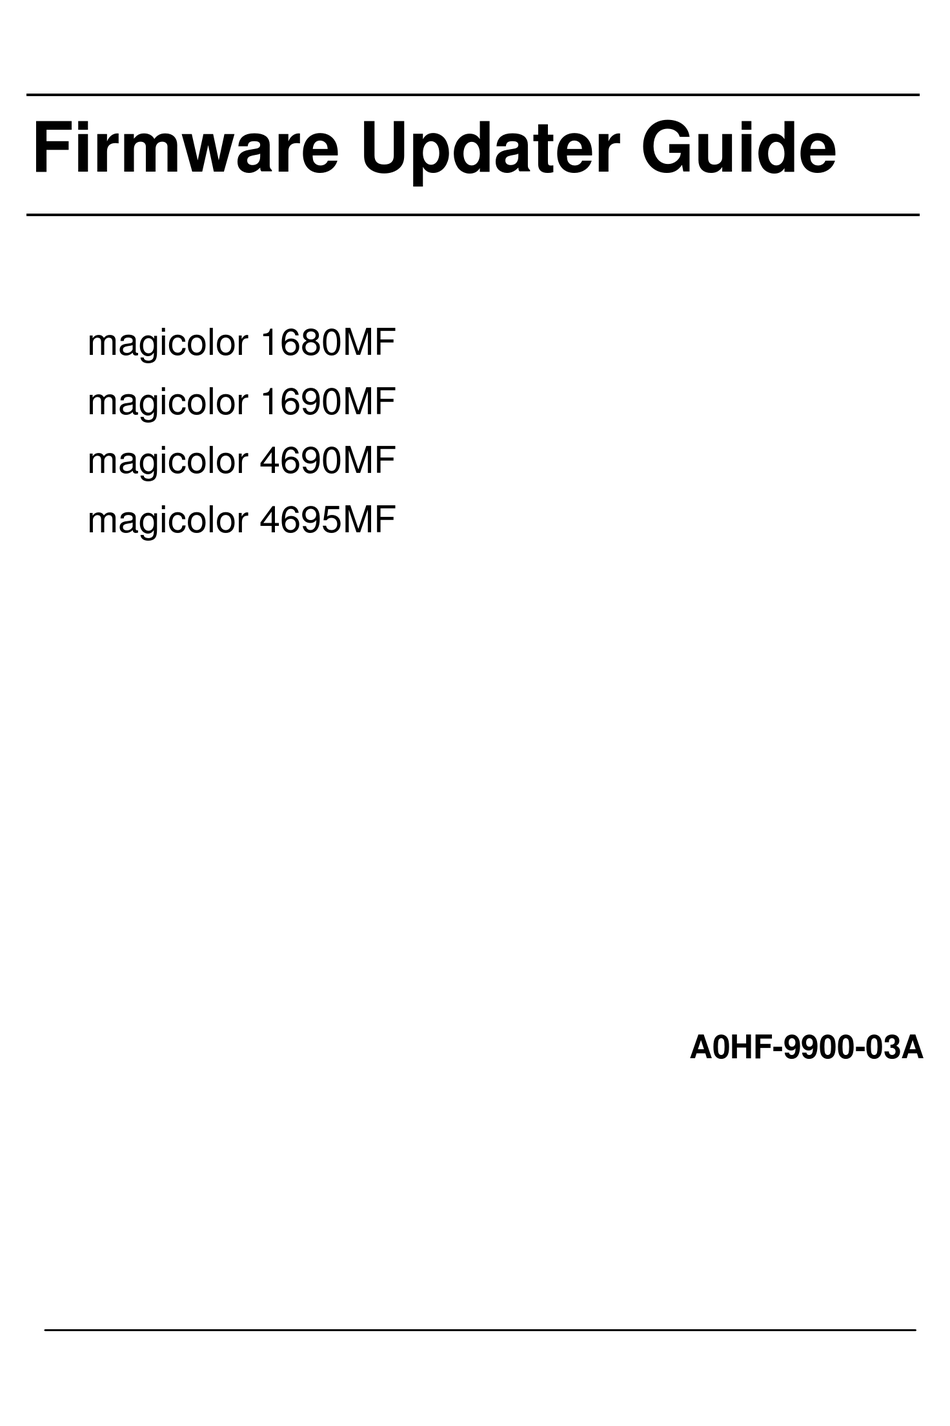 Free Software Printer Megicolor 1690Mf / Software Printer Magicolor 1690Mf / Konica Minolta ...